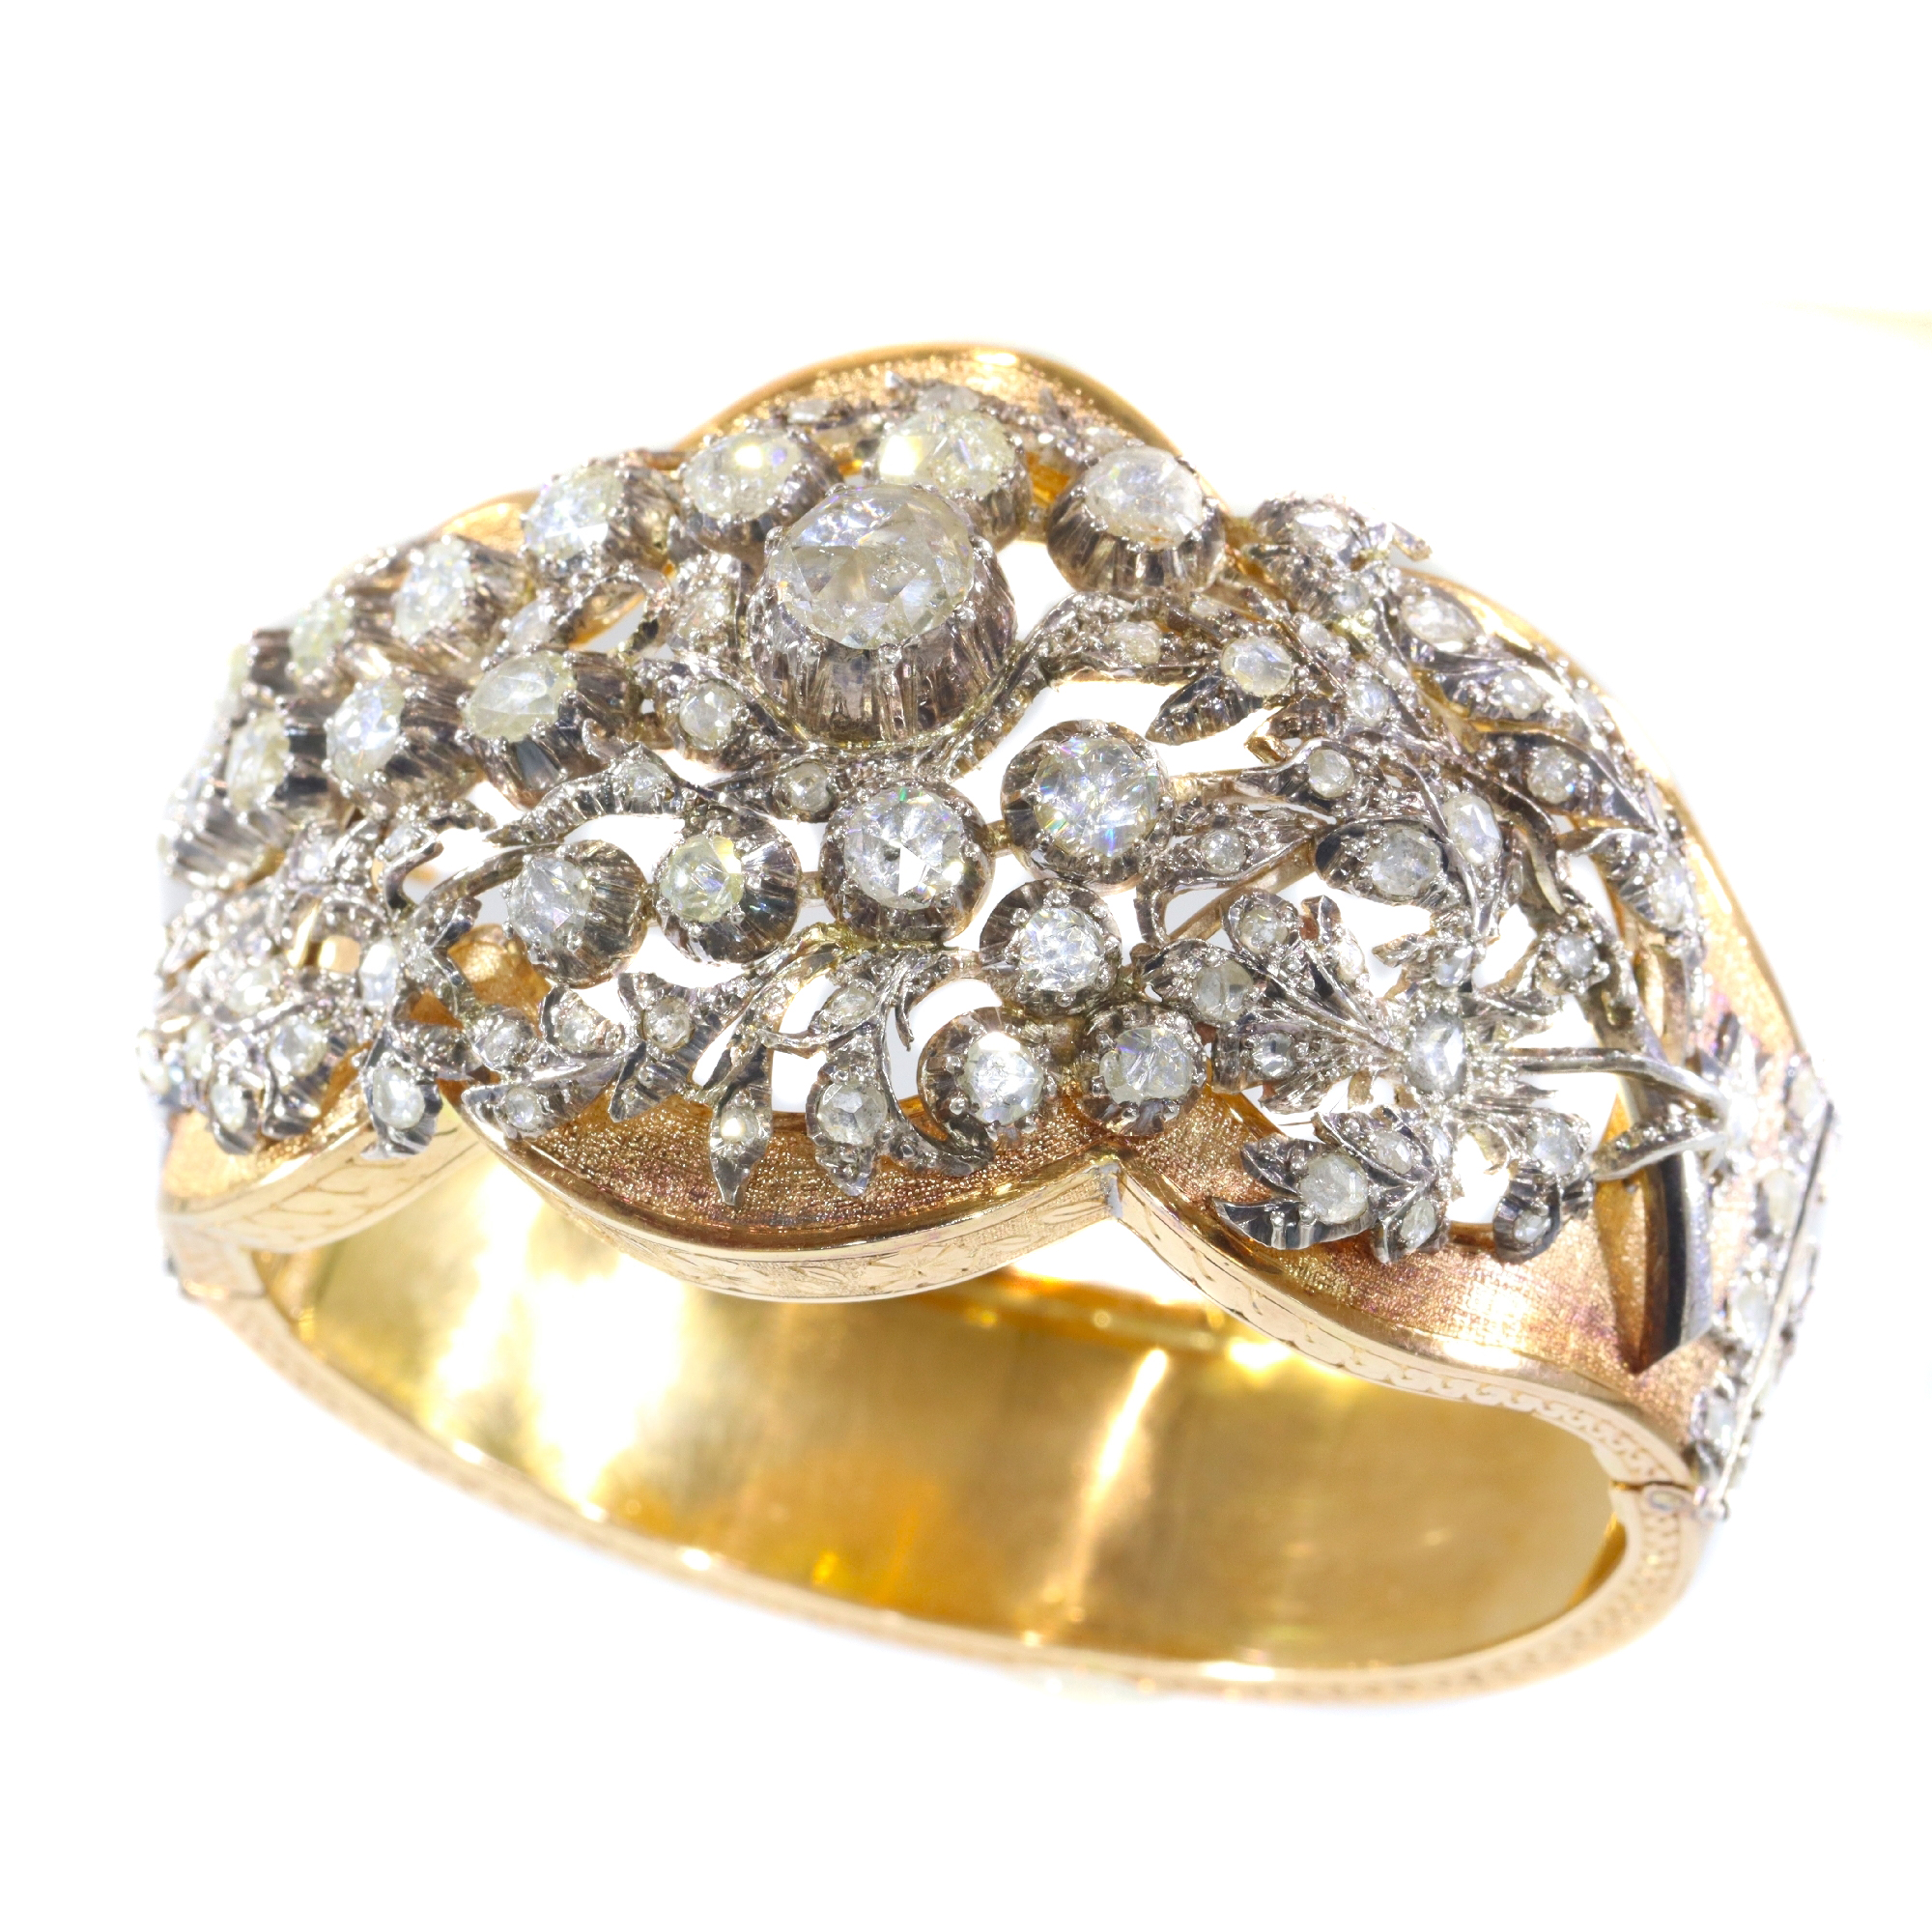 Vintage Fifties antique style diamond gold bangle